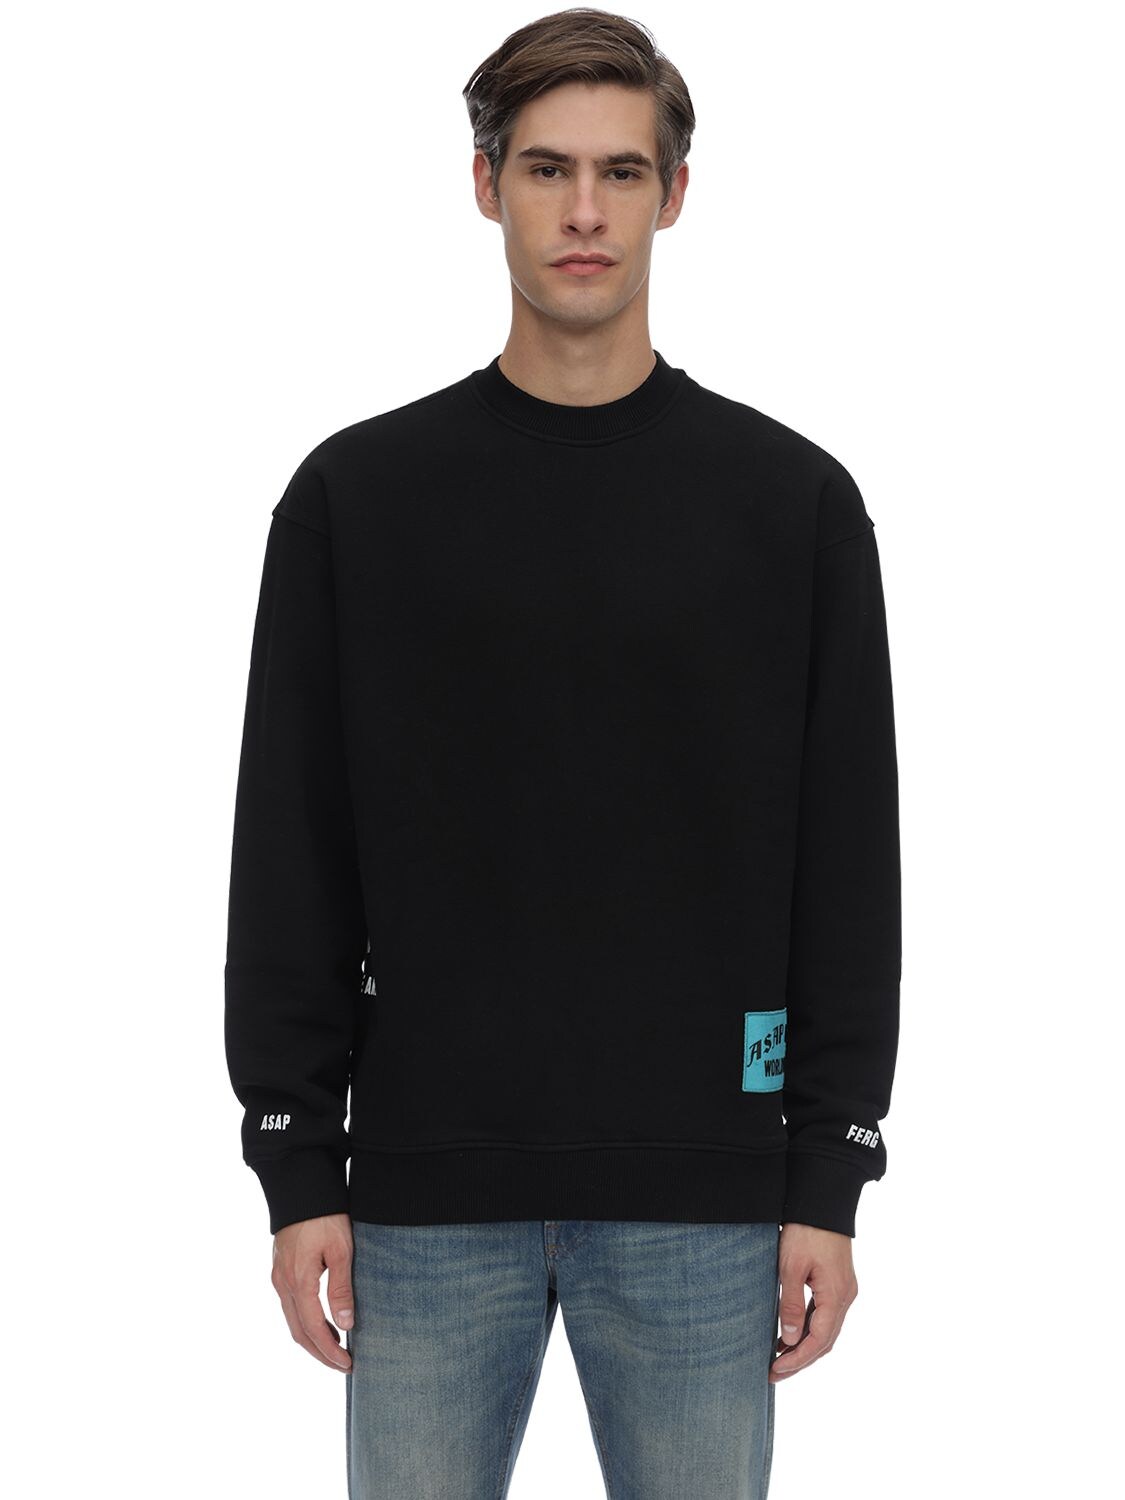 A$ap Ferg By Platformx Over Printed Cotton Jersey Sweatshirt In Black